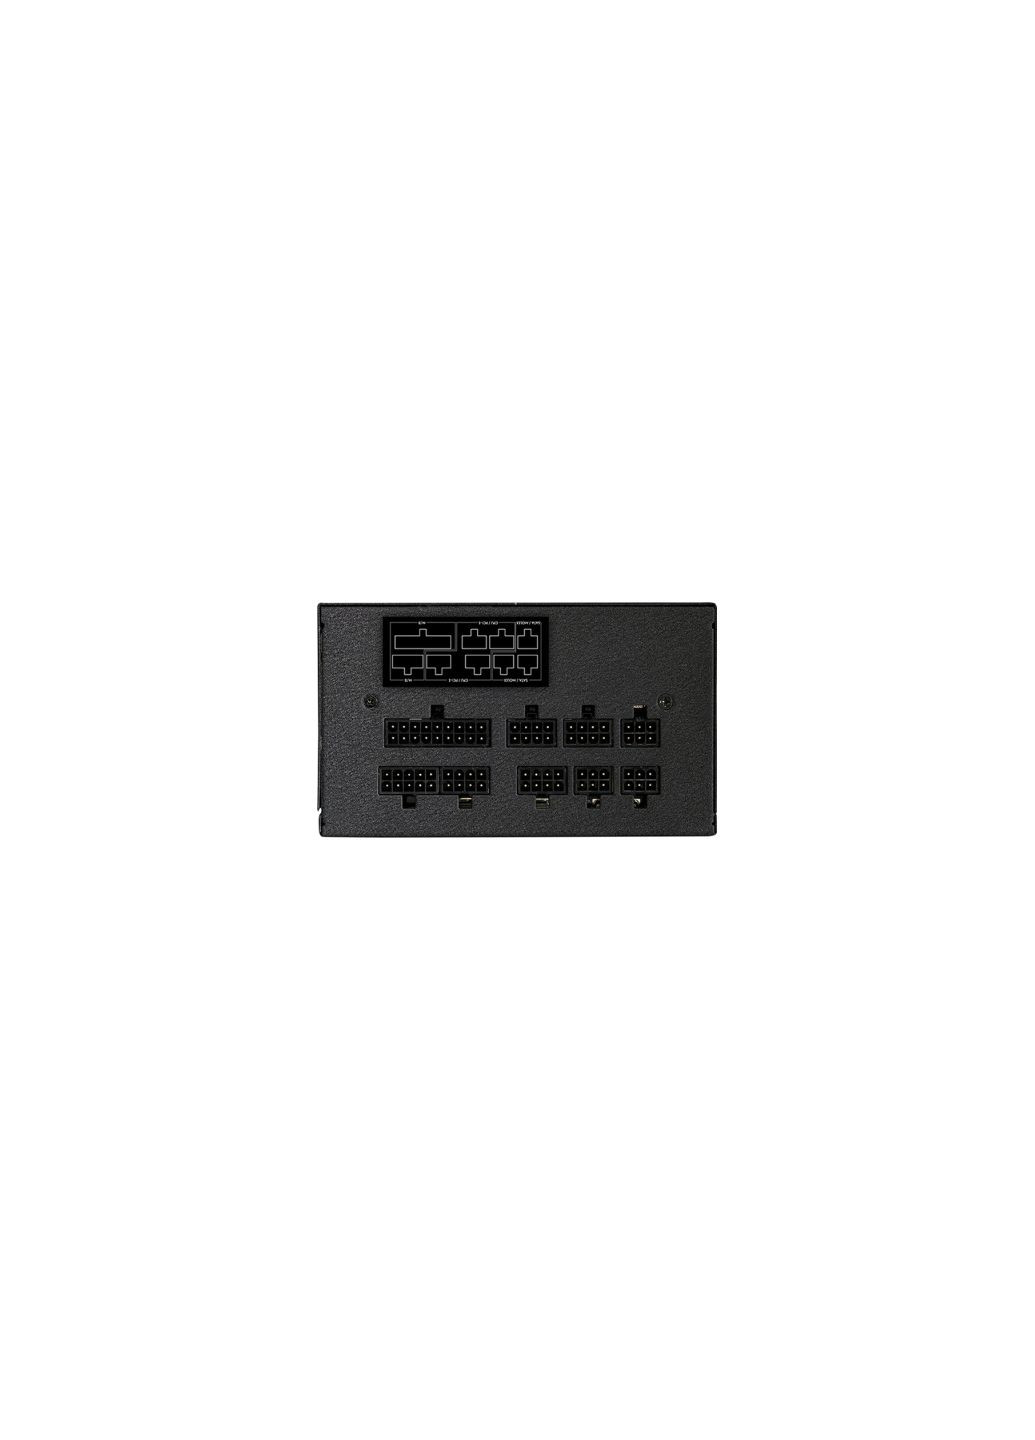 Блок питания (BDK550FC) Chieftec 550w steelpower (275102565)